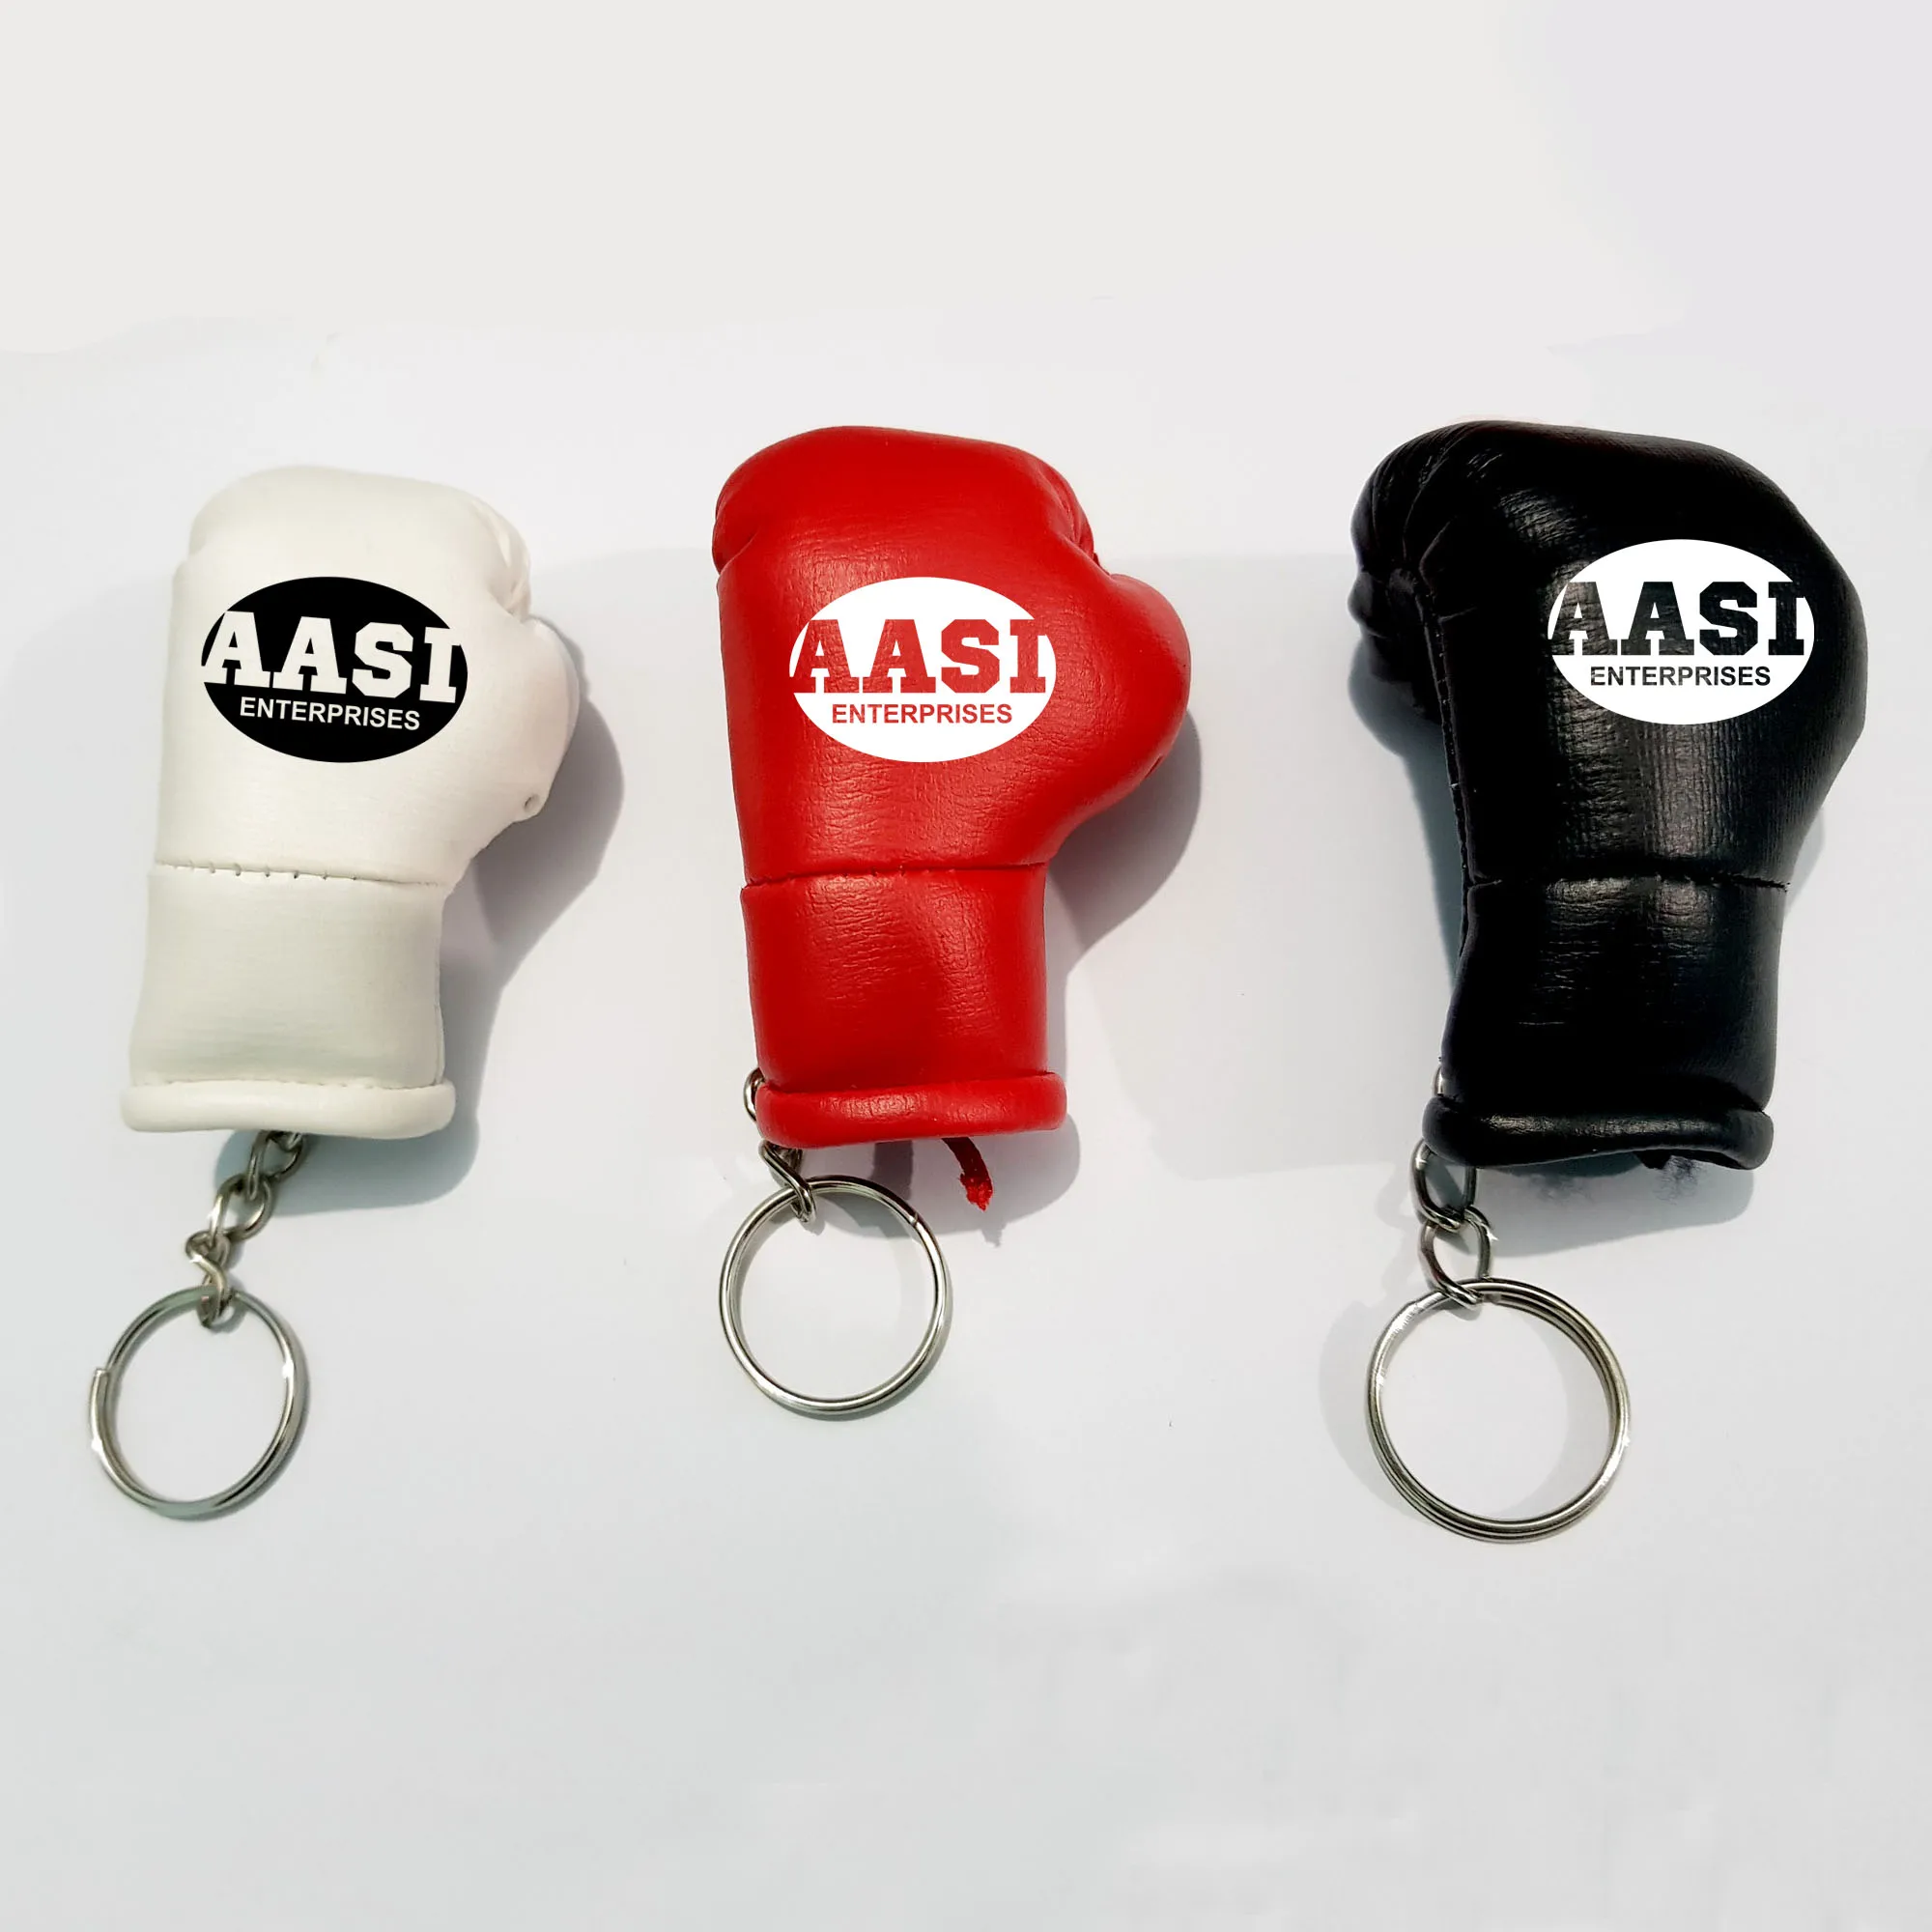 Keychain Mini boxing gloves key chain ring flag key ring cute LAOS